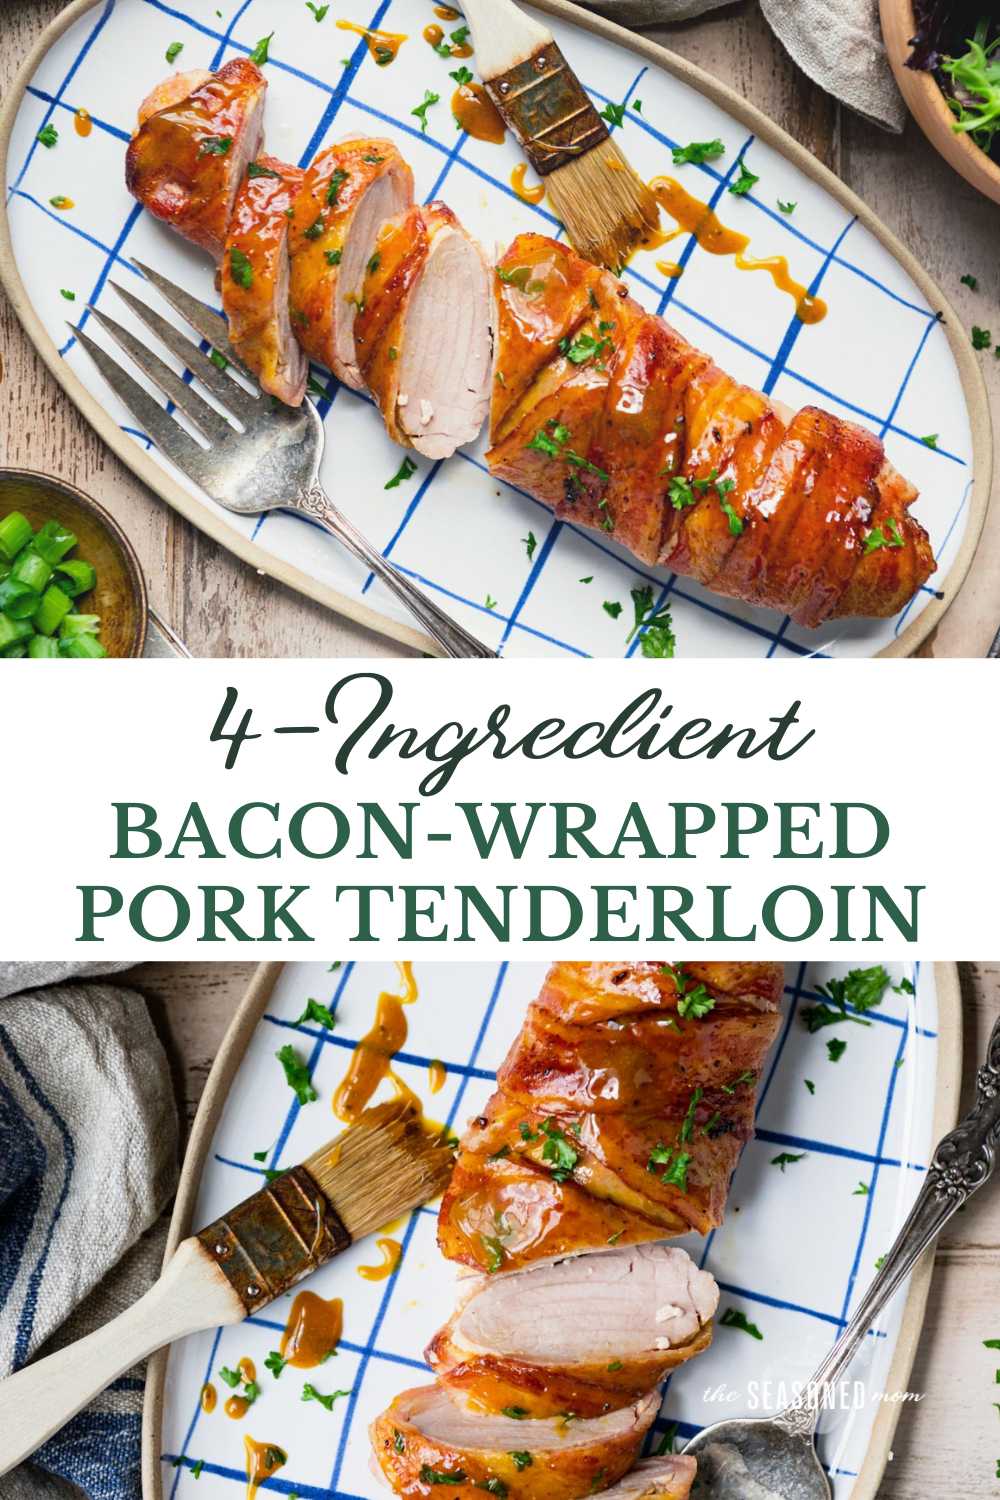 Bacon-Wrapped Pork Tenderloin Recipe | The Seasoned Mom